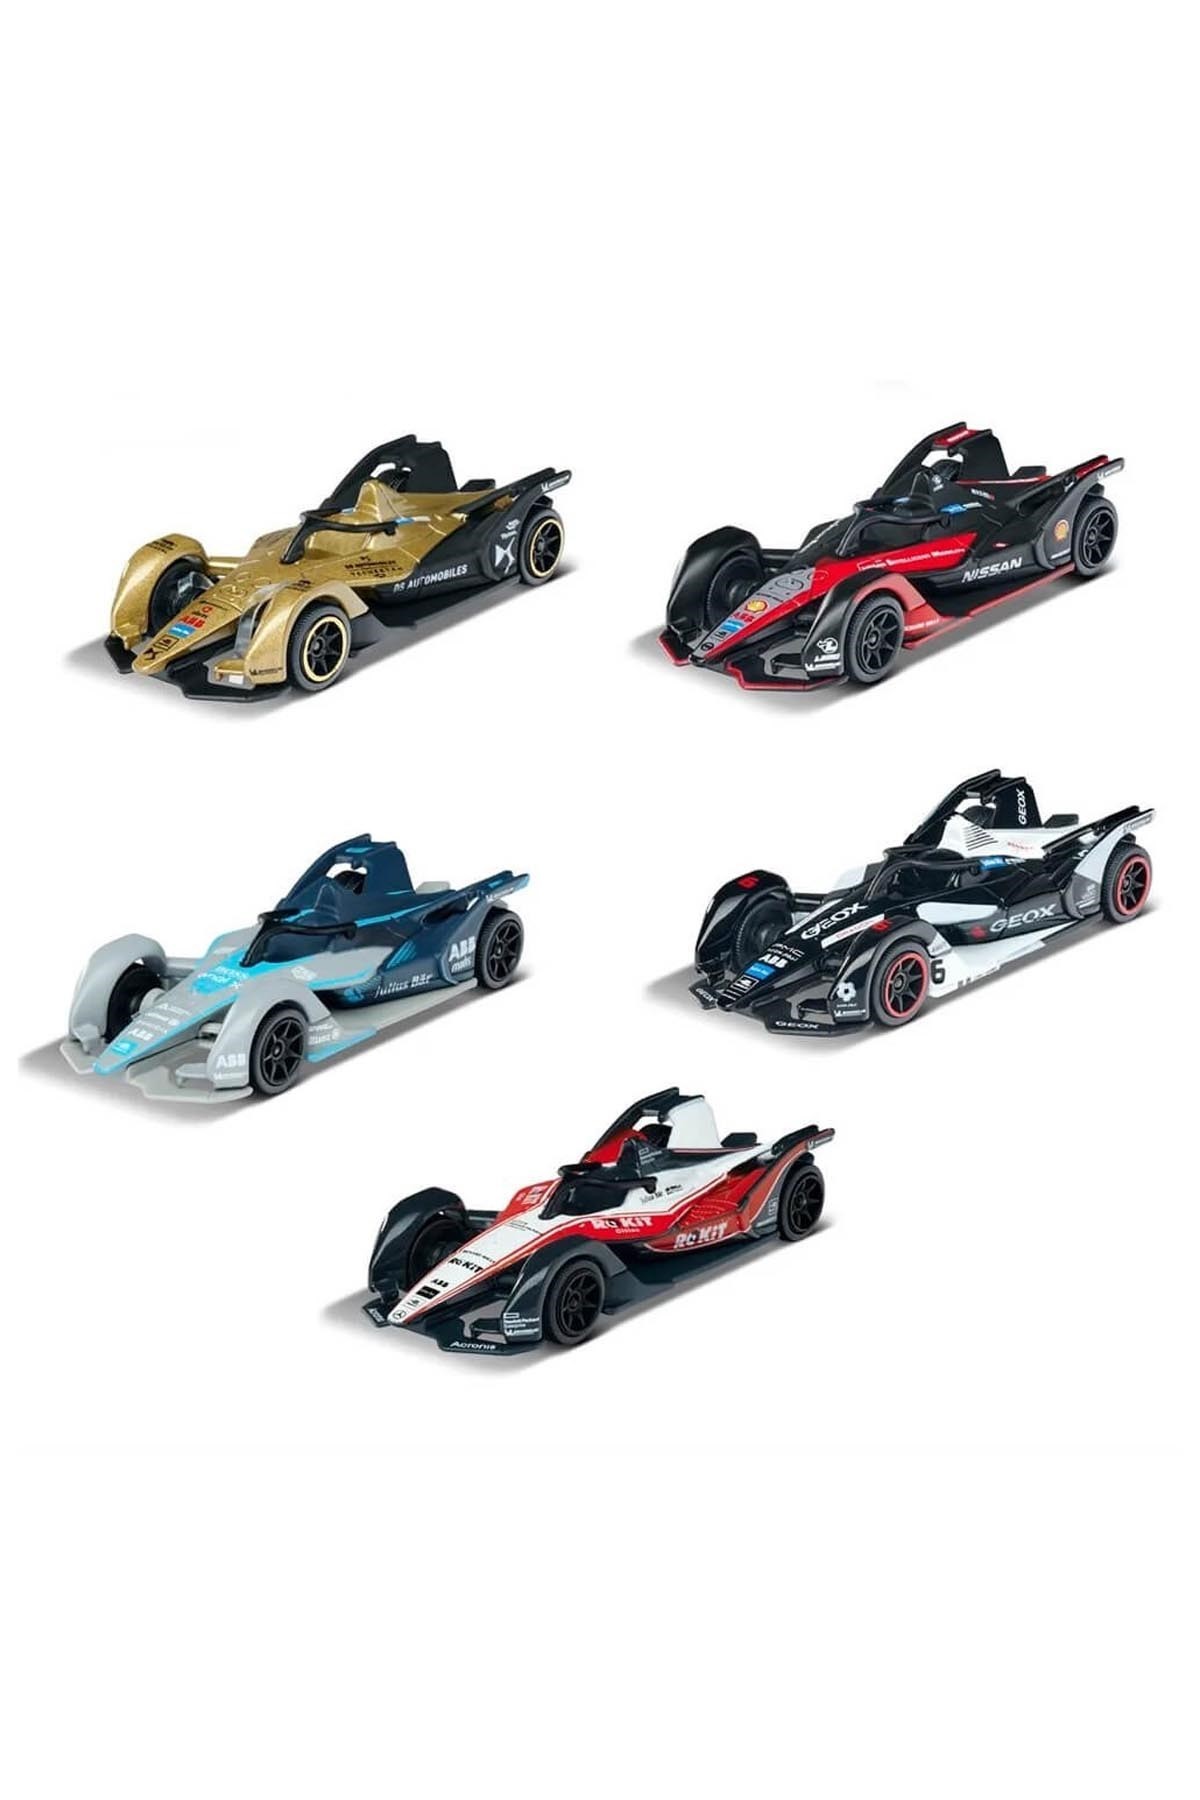 Majorette Simba Formula-E Gen 2 Cars 5 Pieces Giftpack Araba